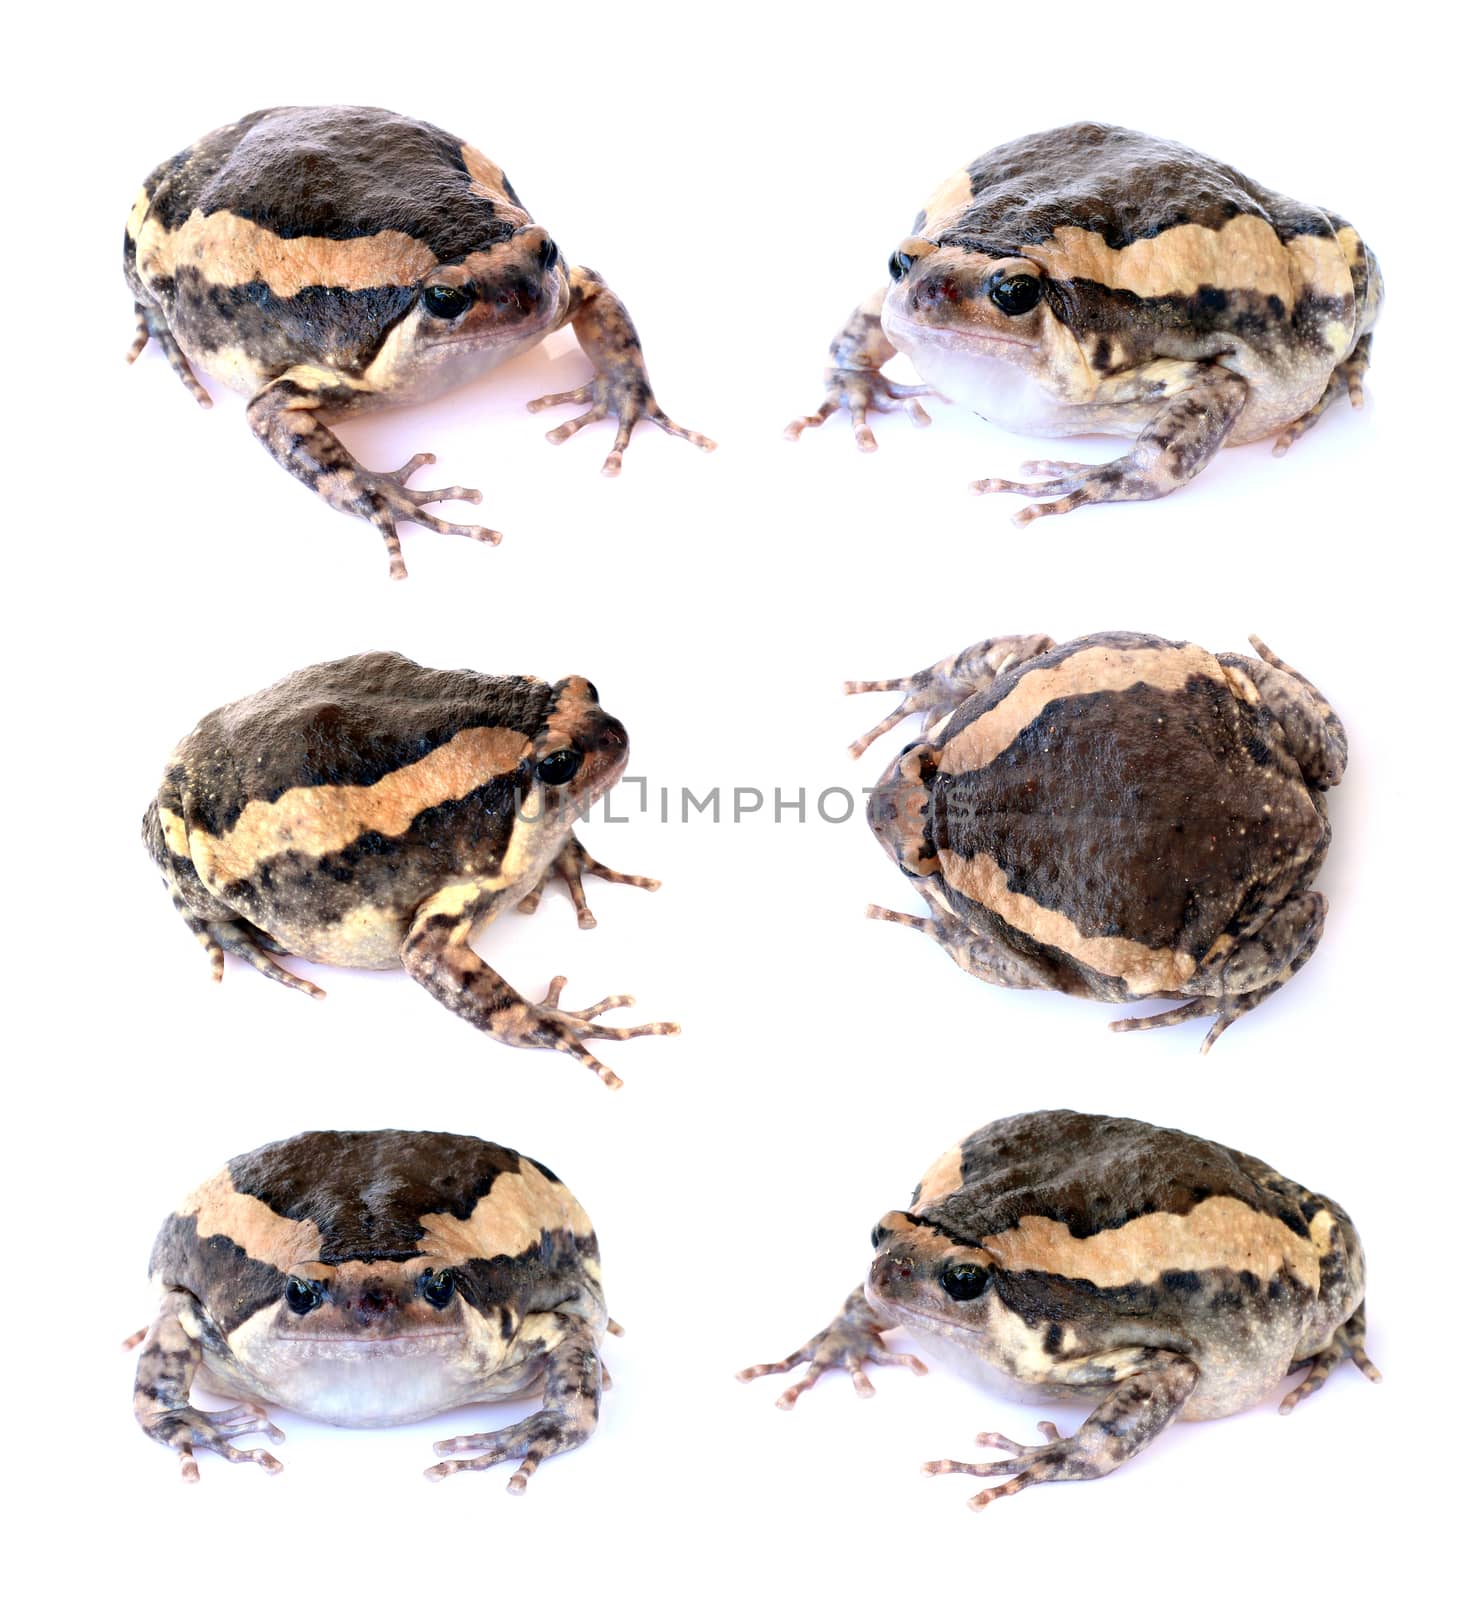 Bullfrog set isolate on a white background